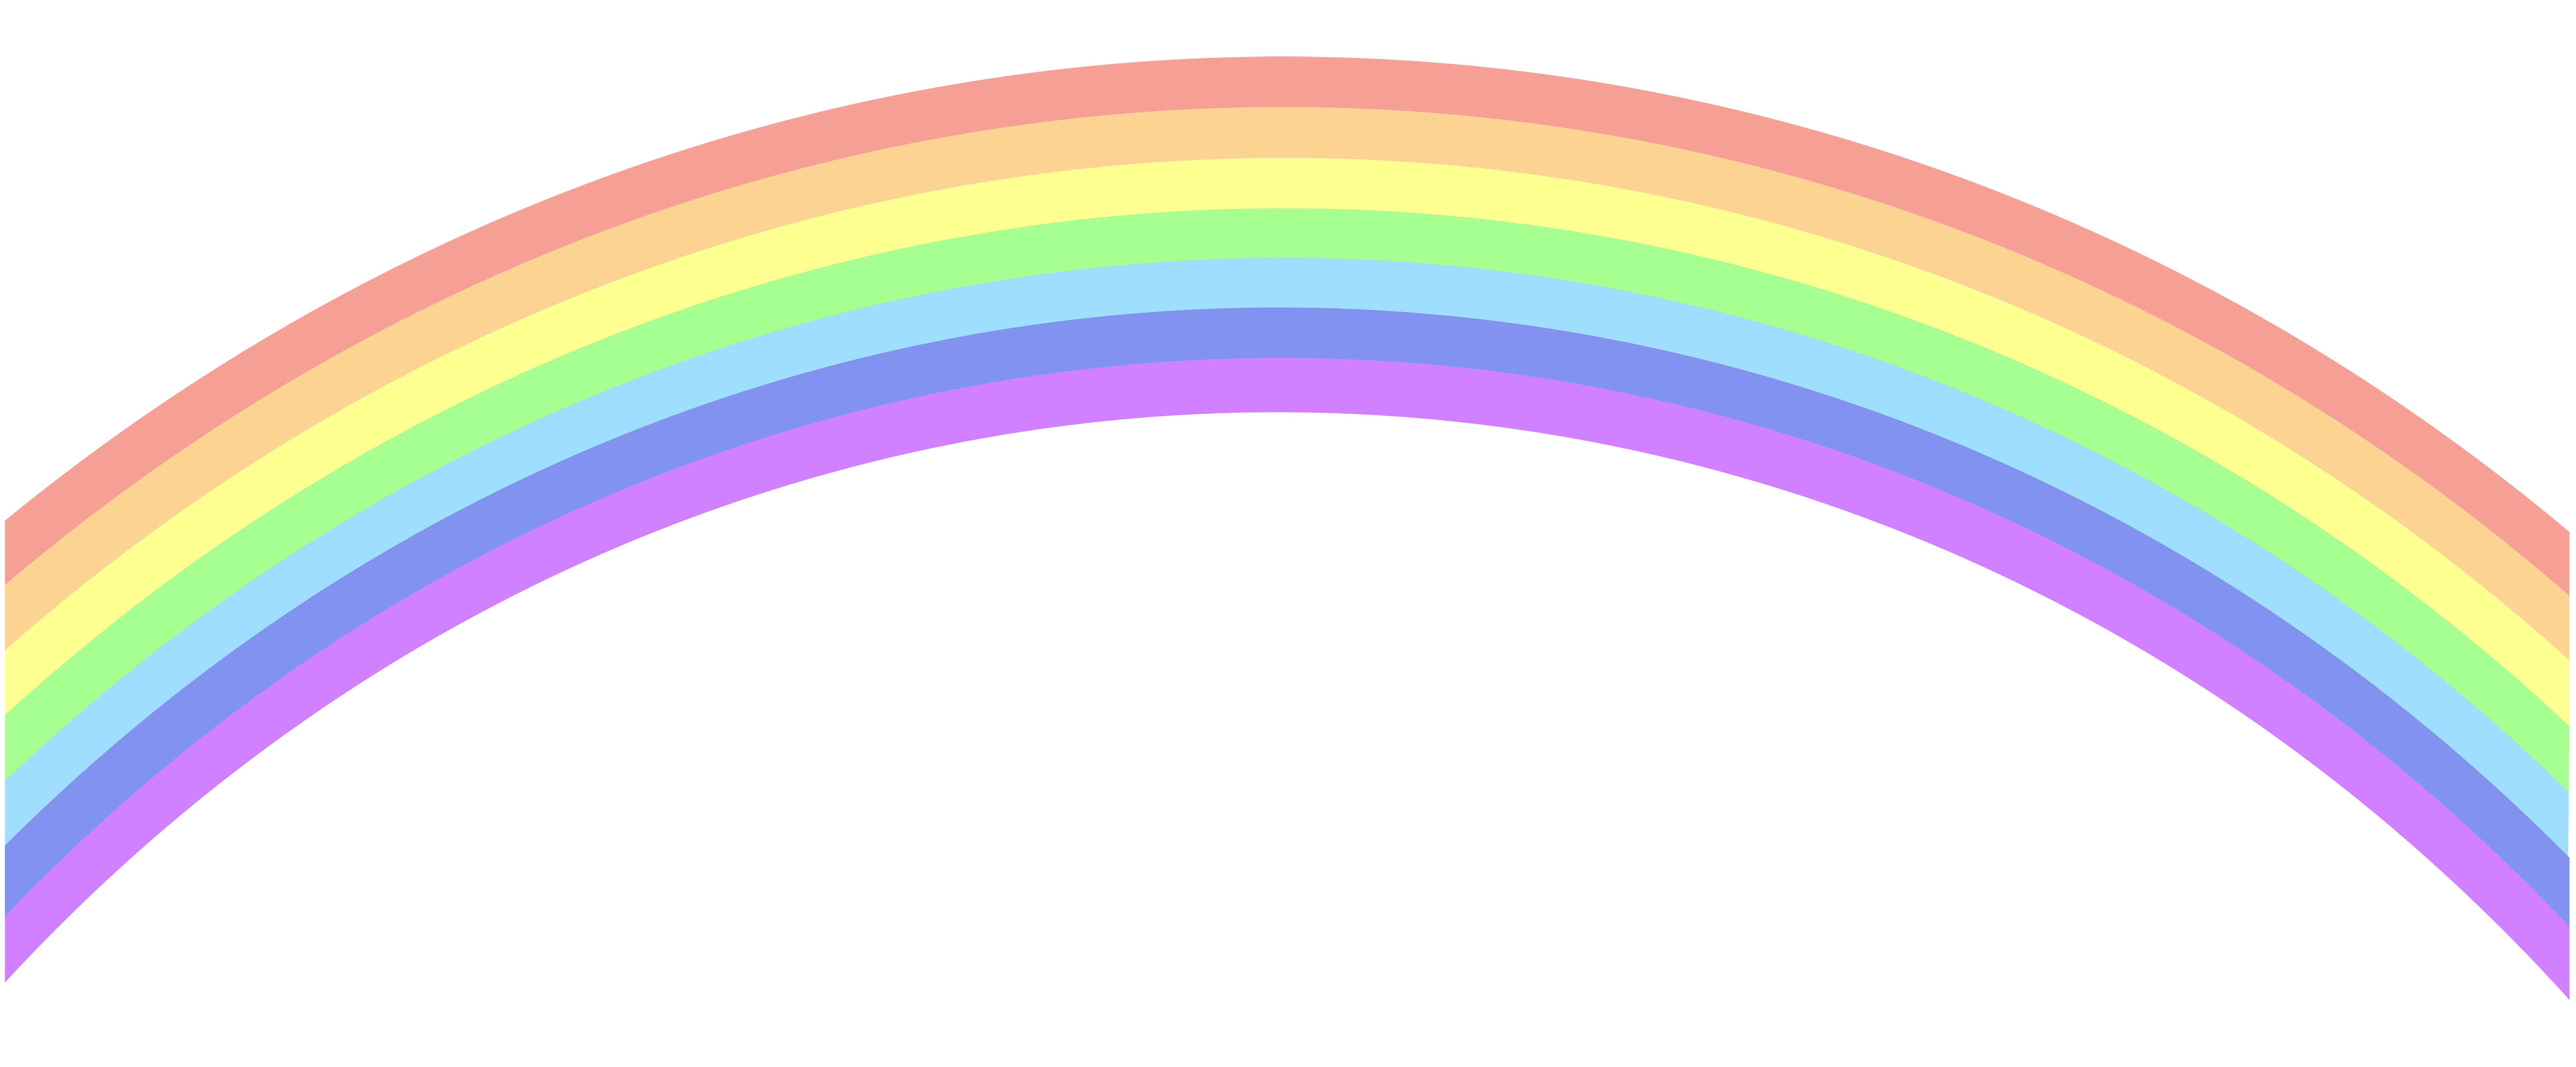 kite clipart rainbow